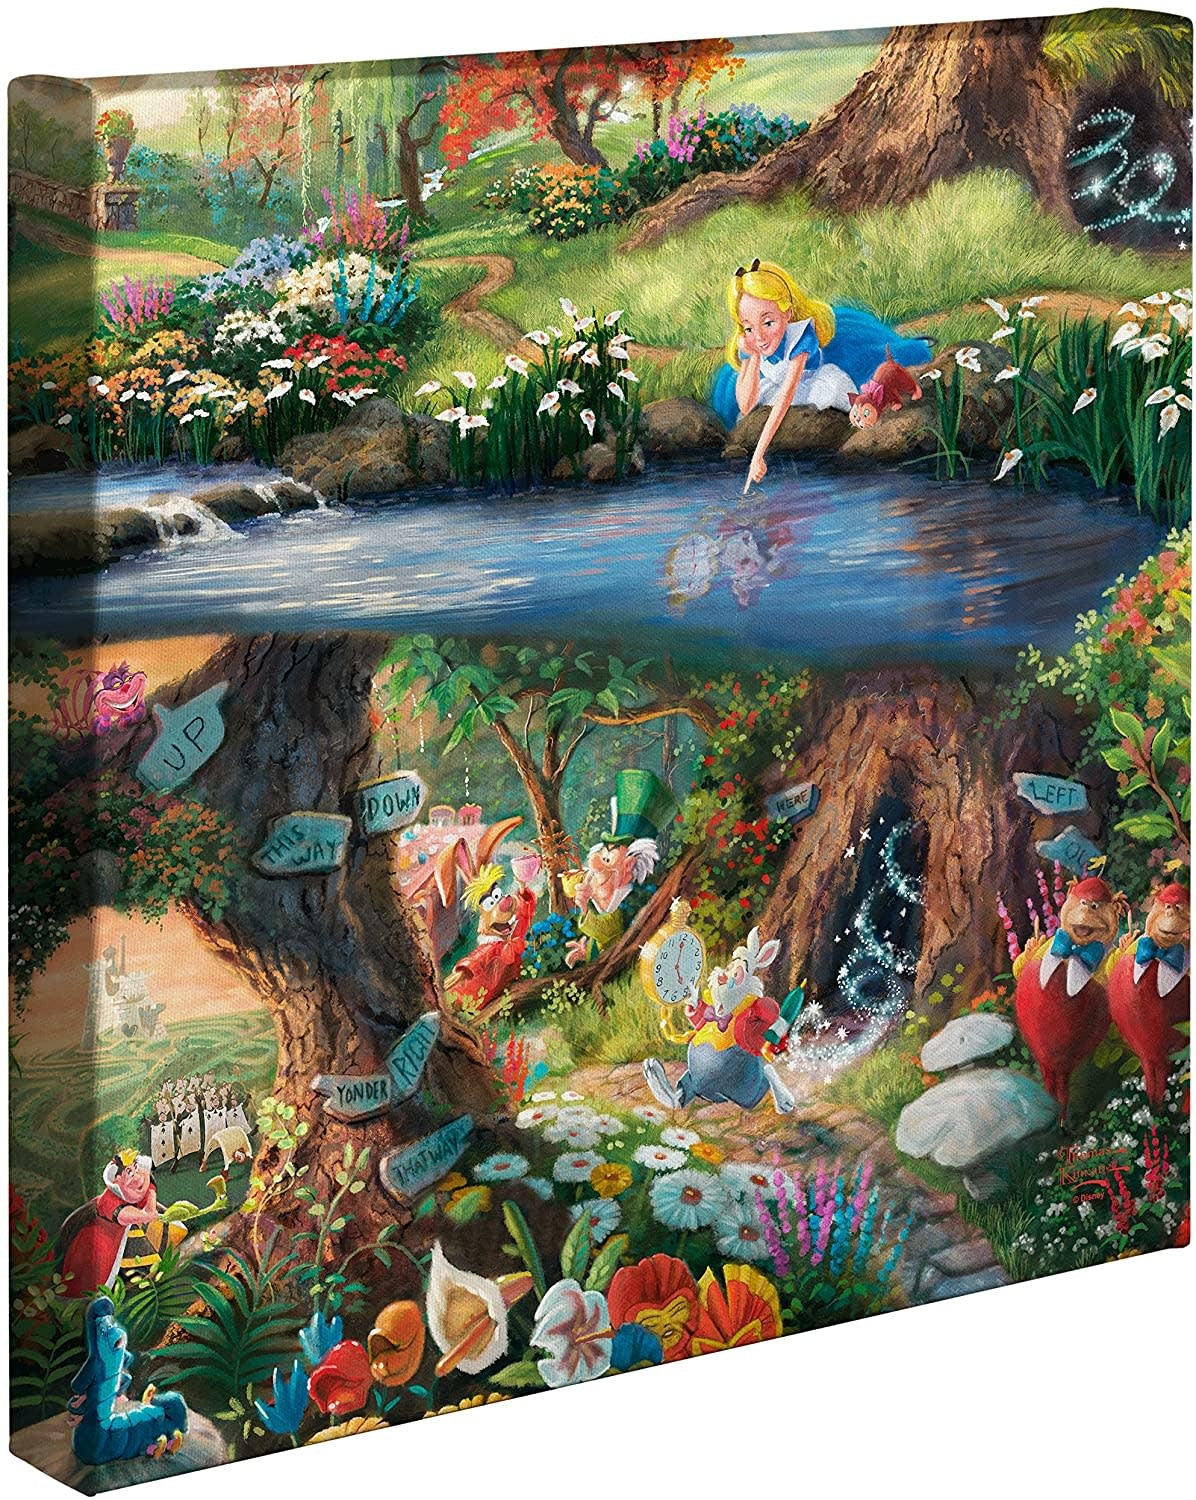 Tea Time in Wonderland by Michelle St.Laurent, Disney Artwork